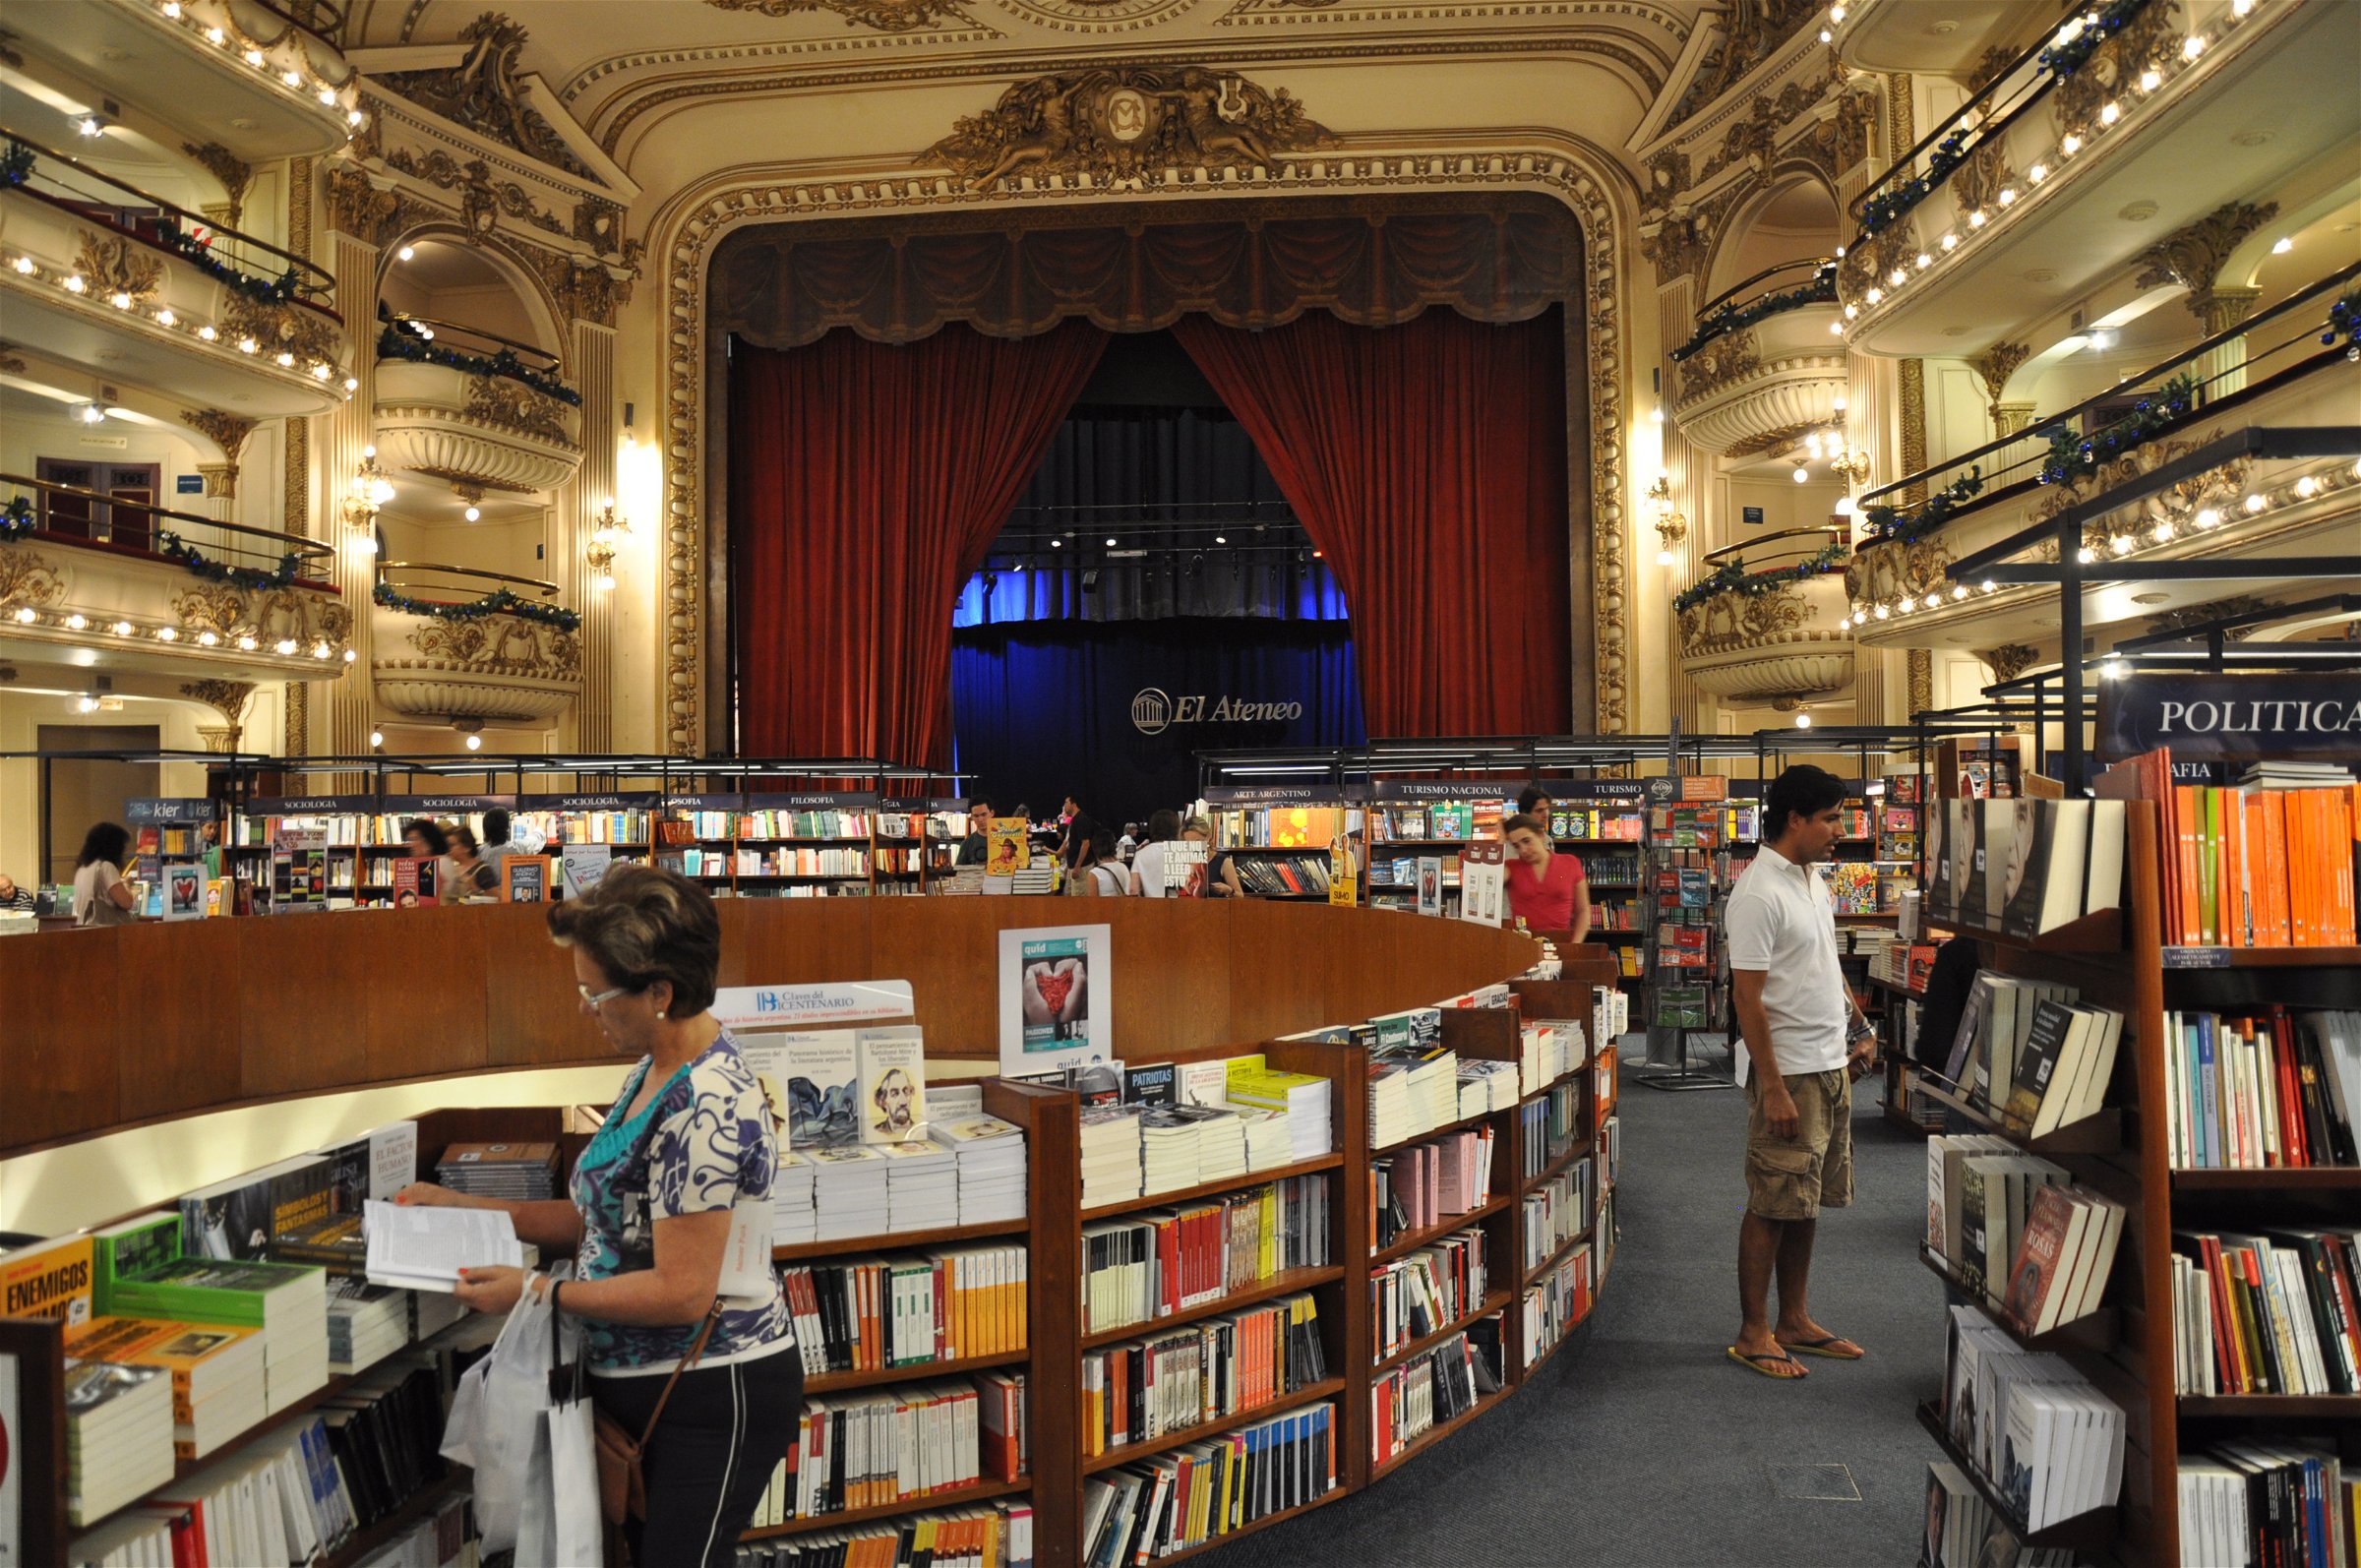 El-Ateneo-Interior-Lascar bookstore